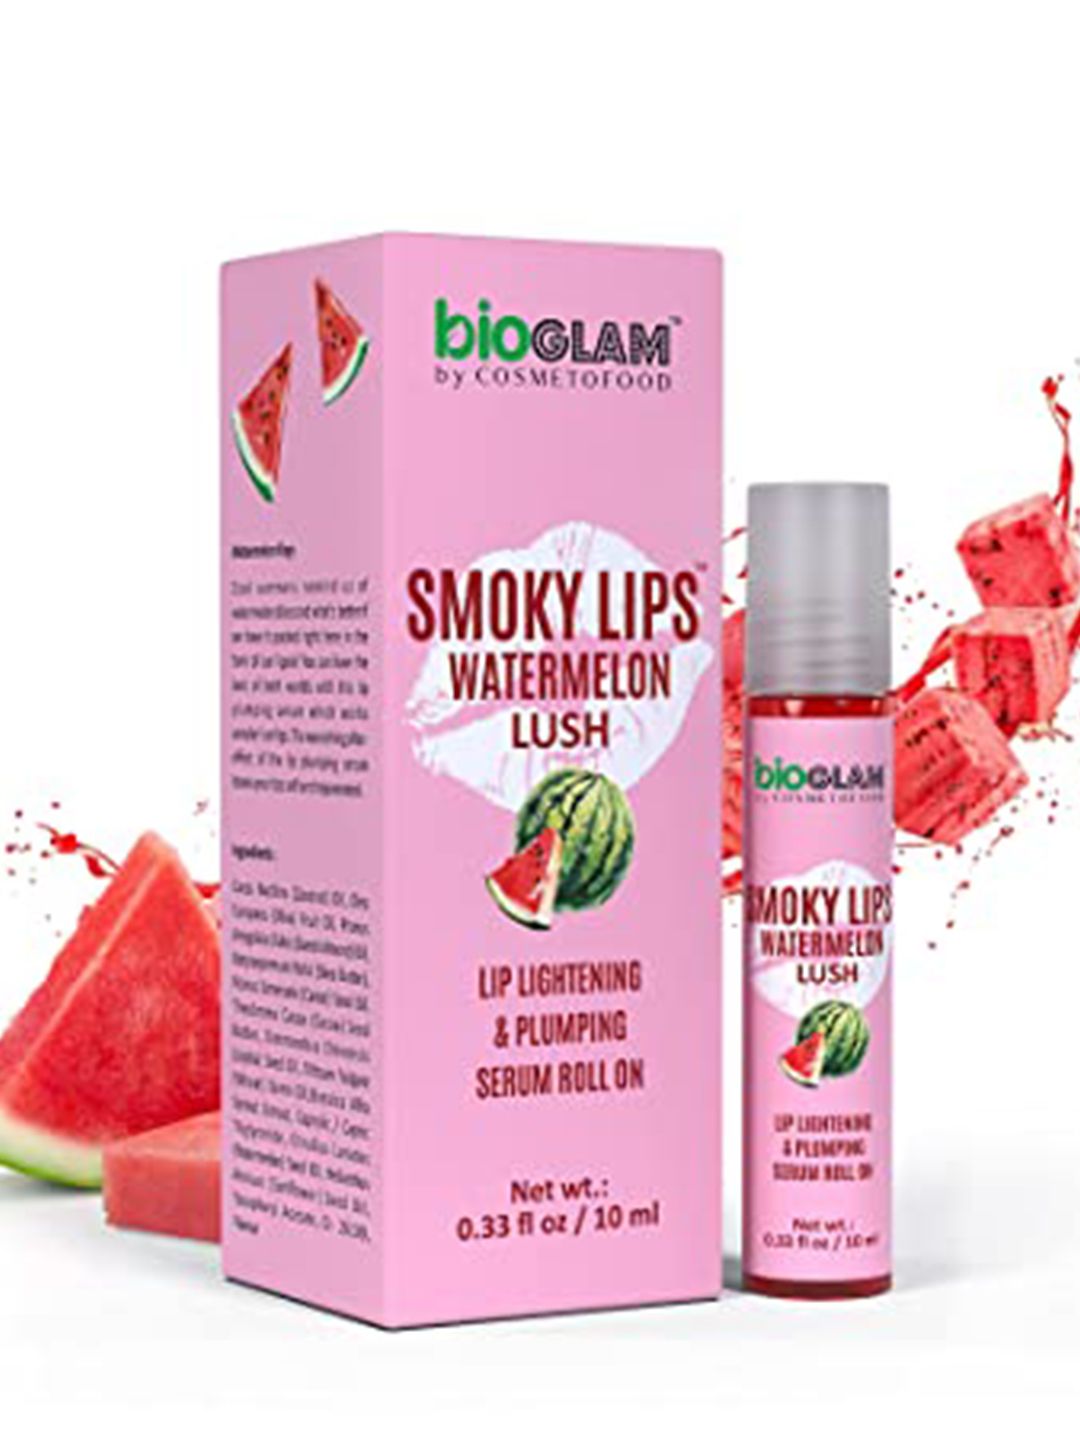 COSMETOFOOD Bioglam Smoky Lips Watermelon Lush Lip Lightening & Plumping Serum 10 ml Price in India